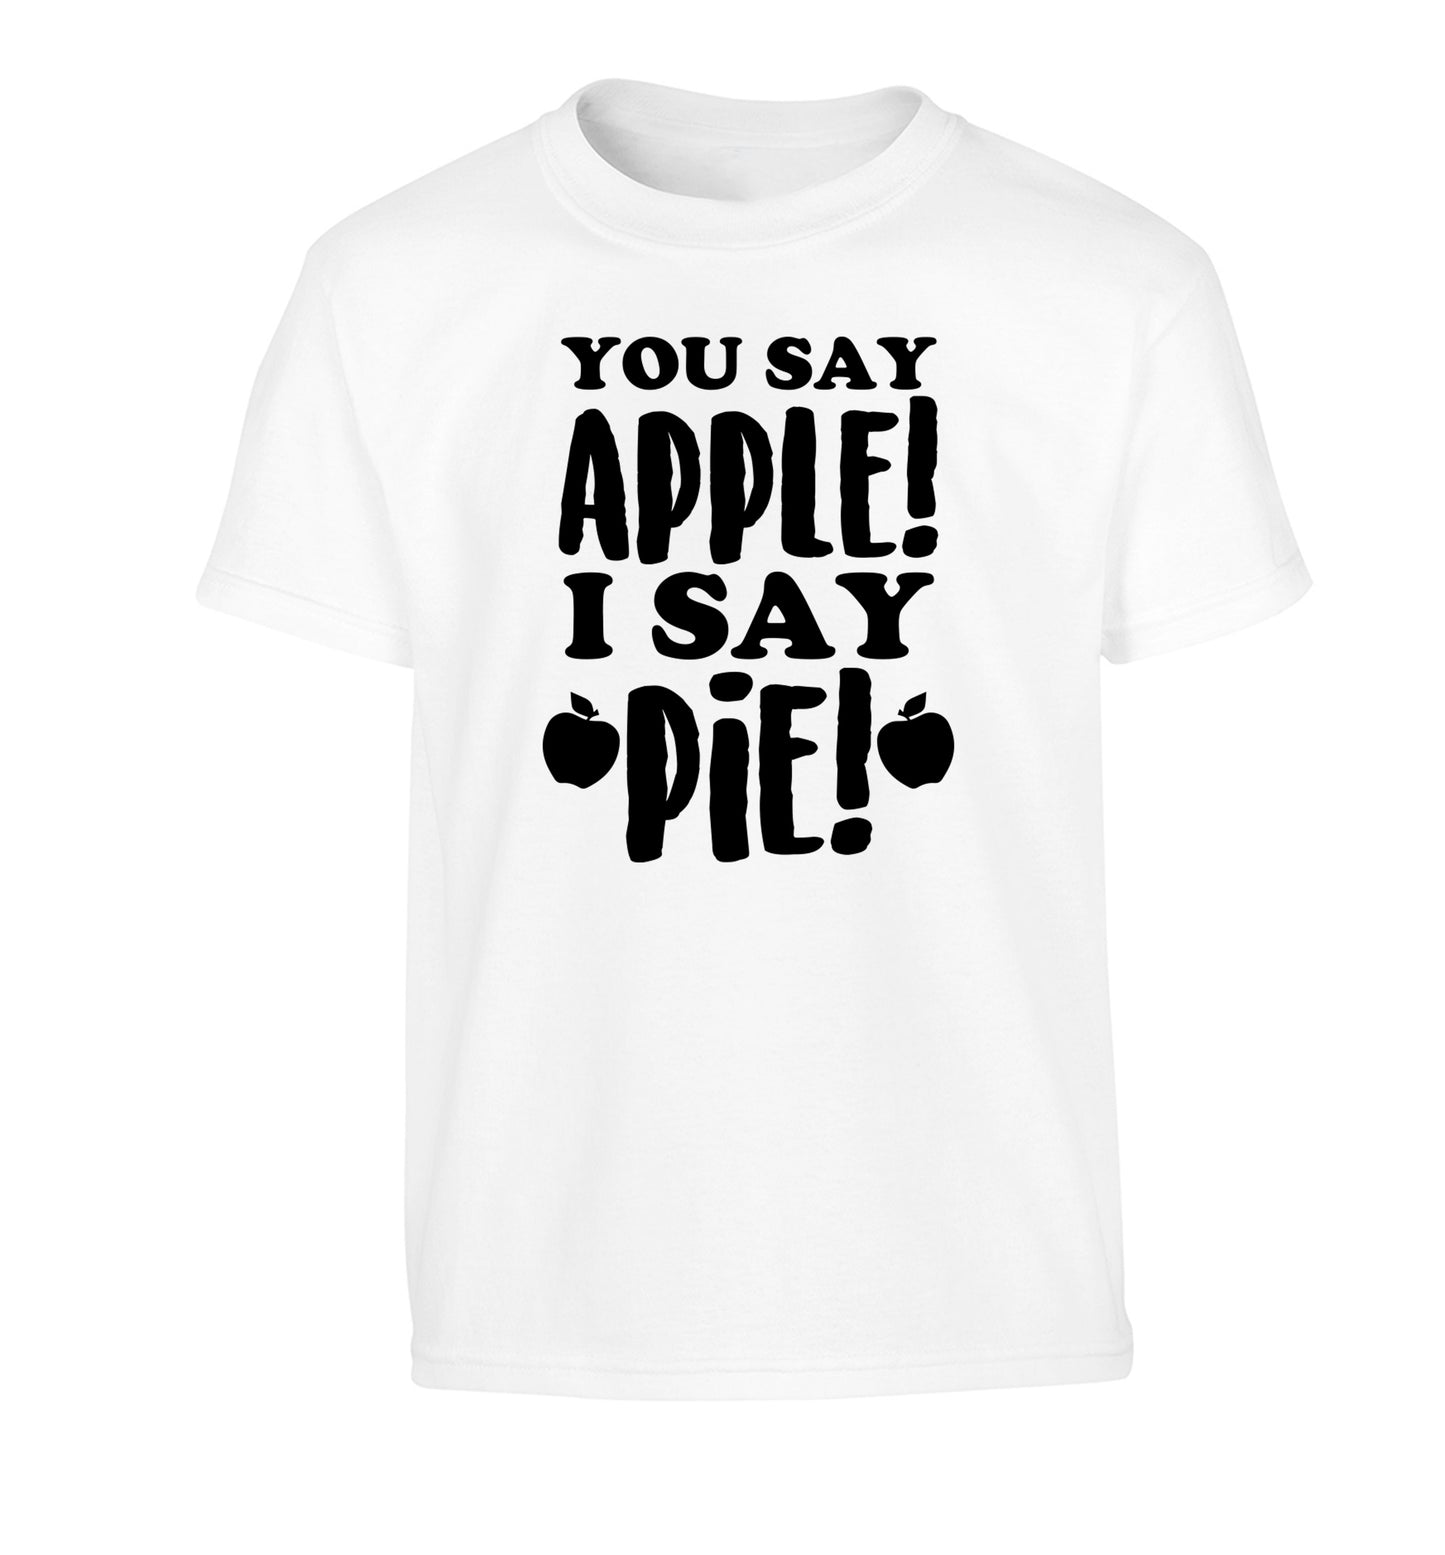 You say apple I say pie! Children's white Tshirt 12-14 Years